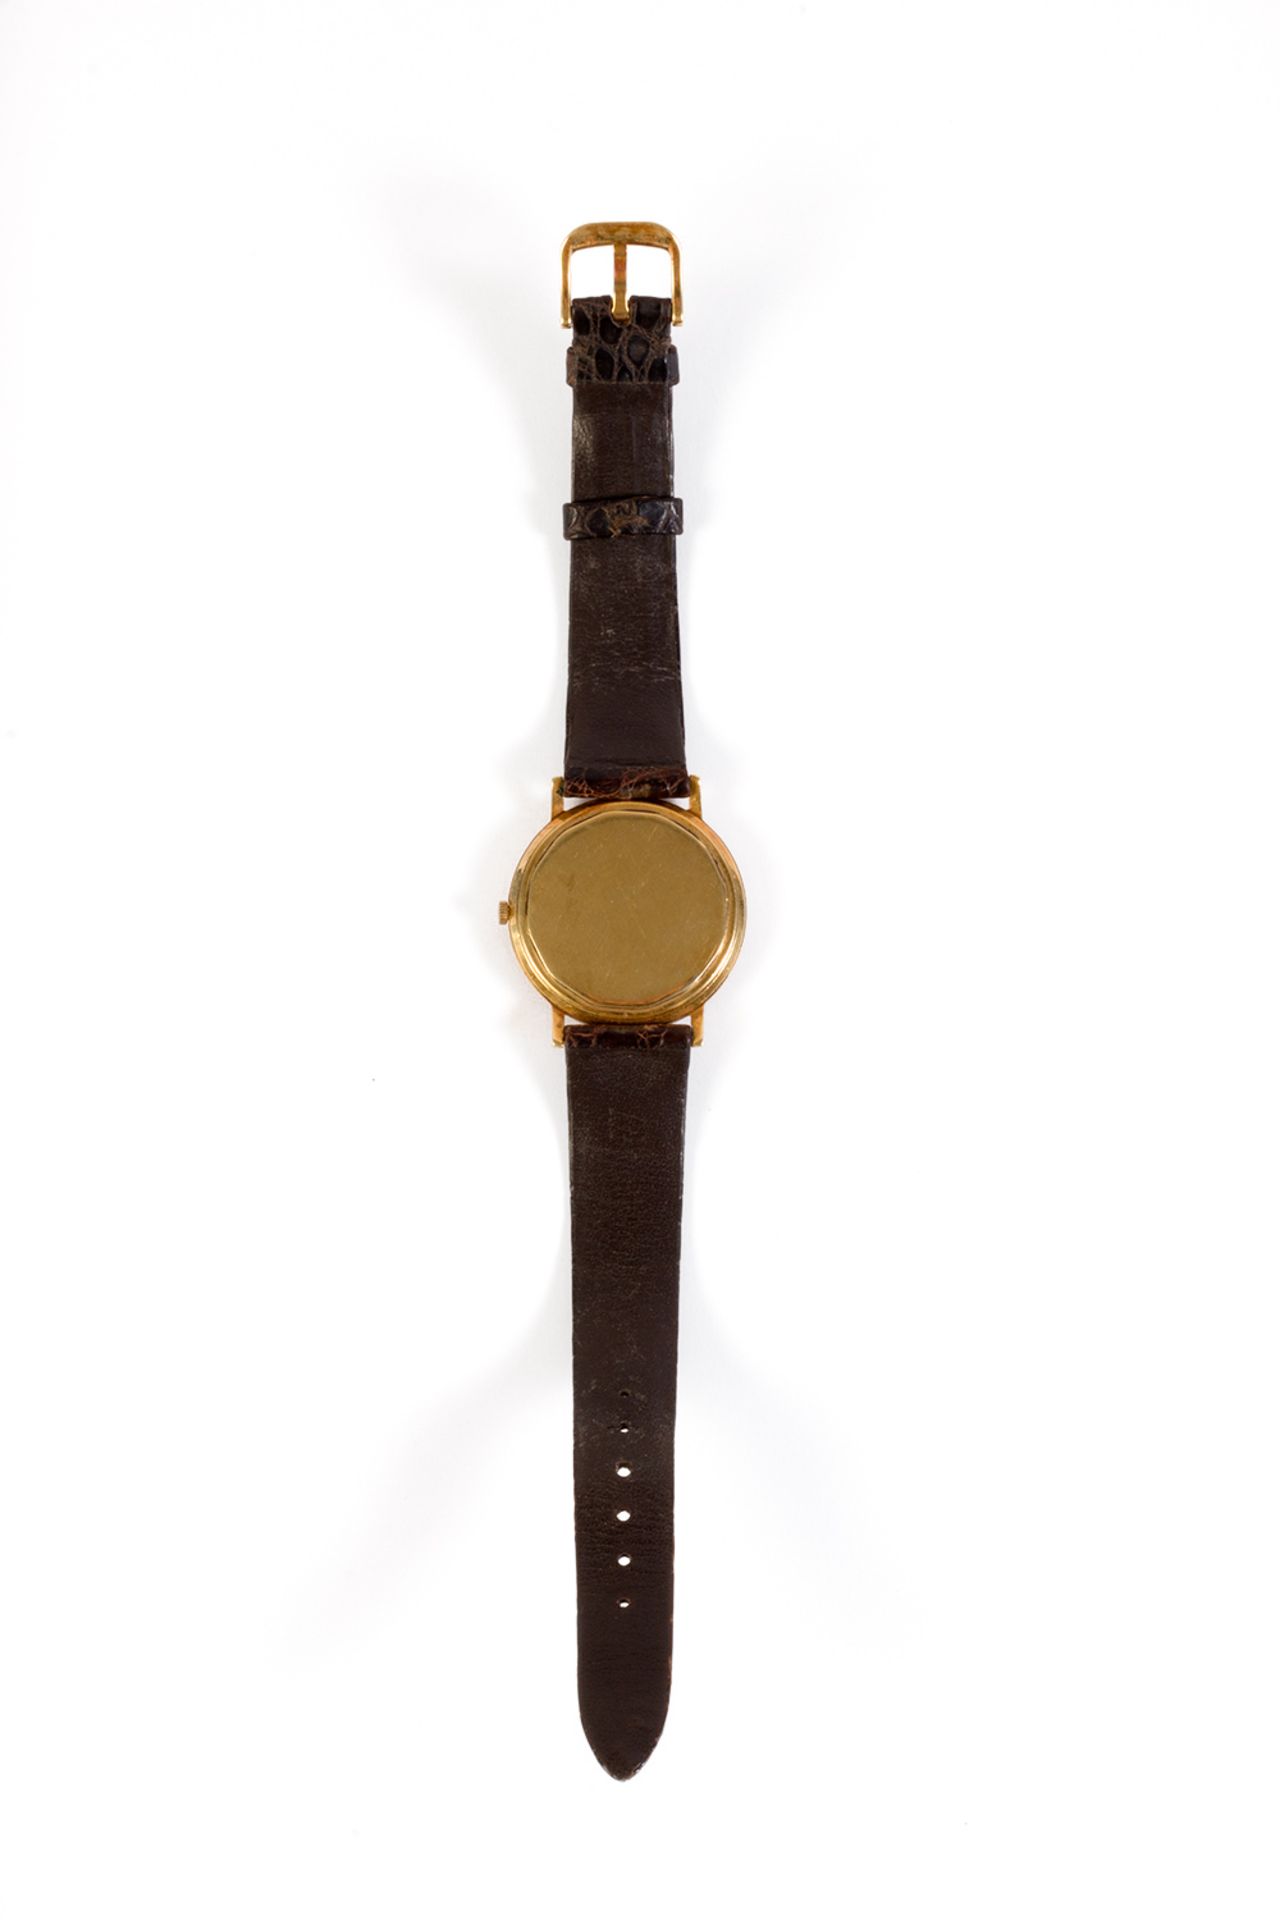 Audemars Piguet wristwatch, Gübelin model, in gold and leather strap. Automatic movement. - Bild 3 aus 6